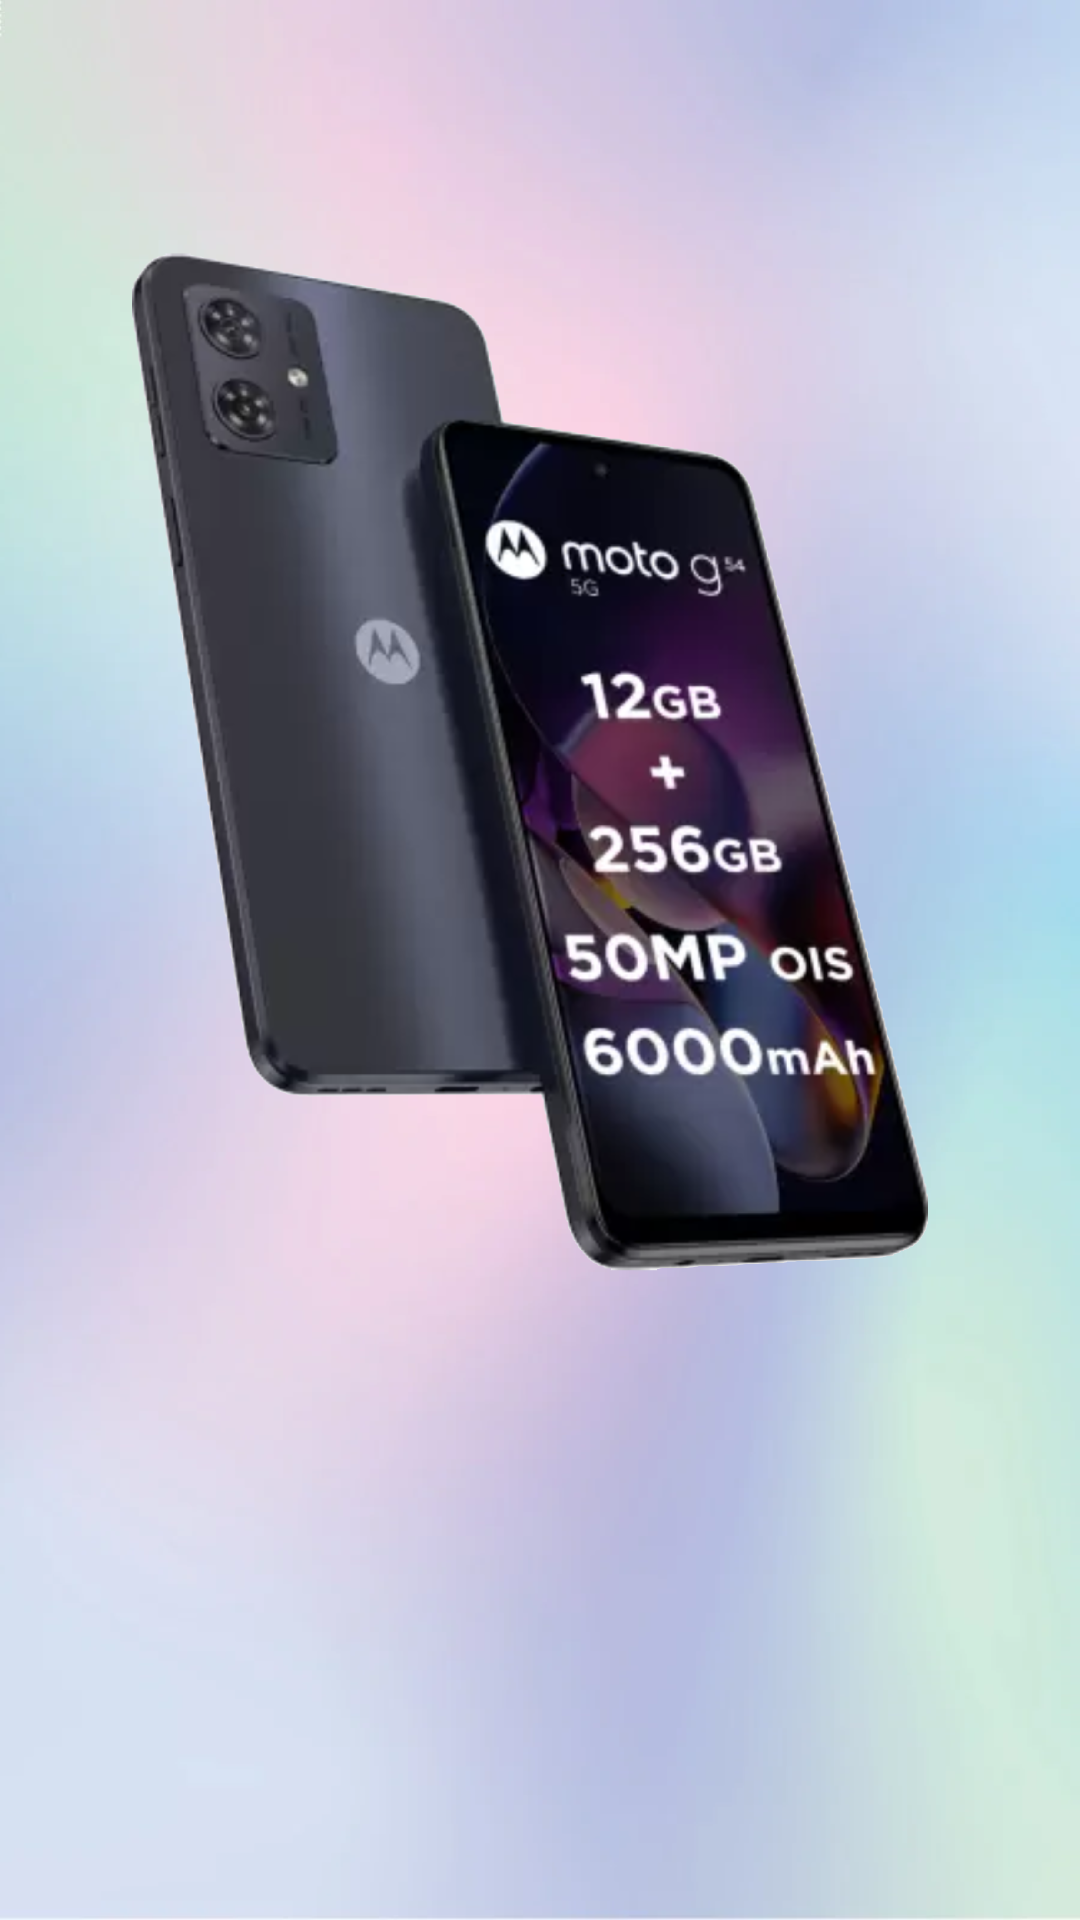 Motorola G54 5G (Midnight Blue, 8GB RAM, 128GB Storage)